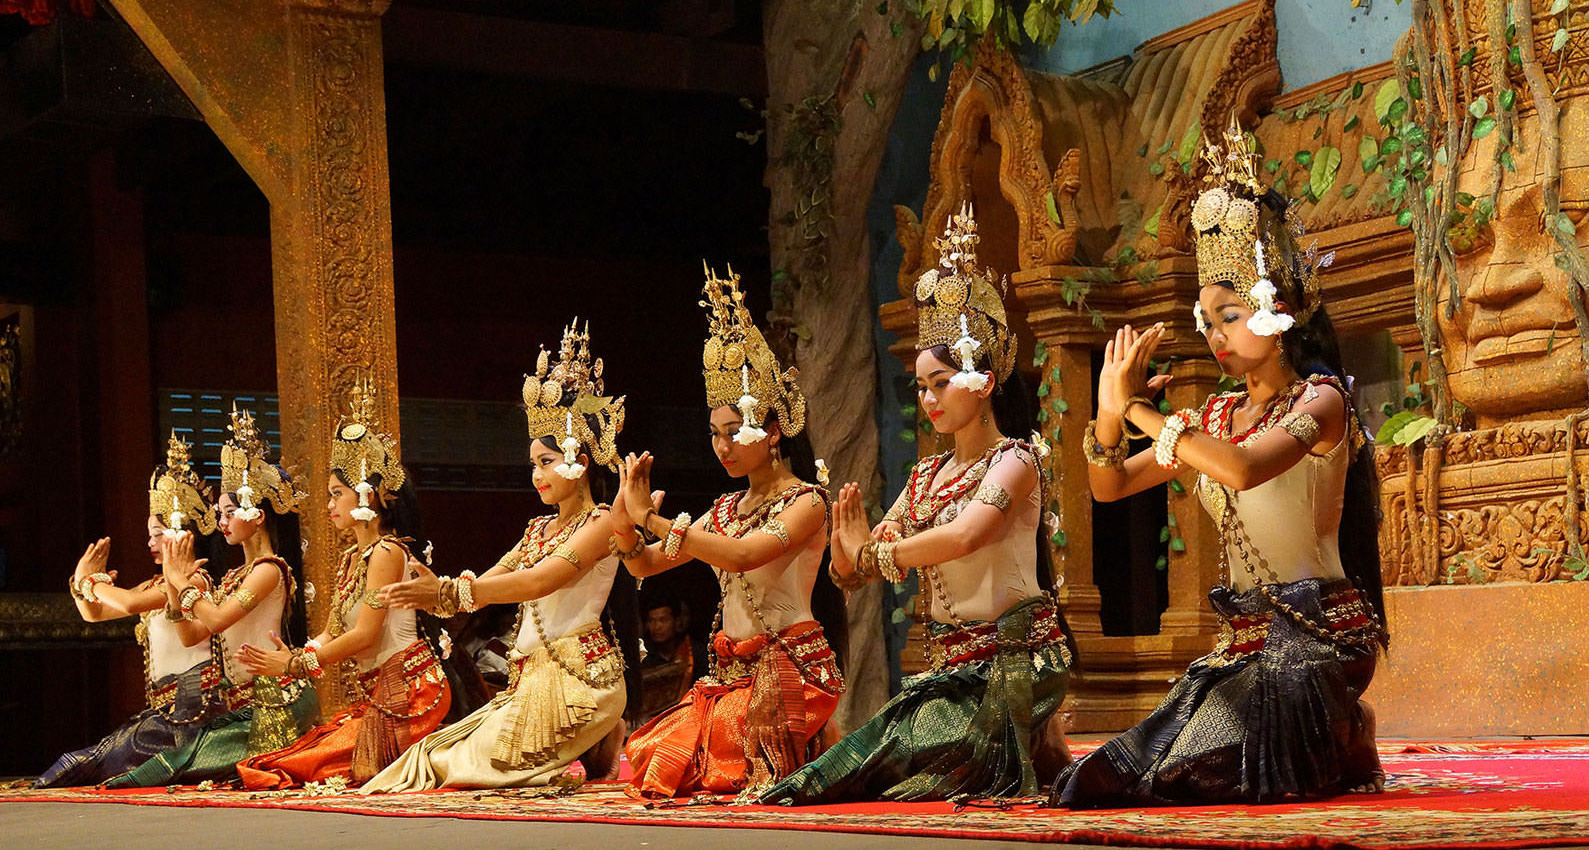 Kamboja | Tari ing modern Khmer budaya - Secret World